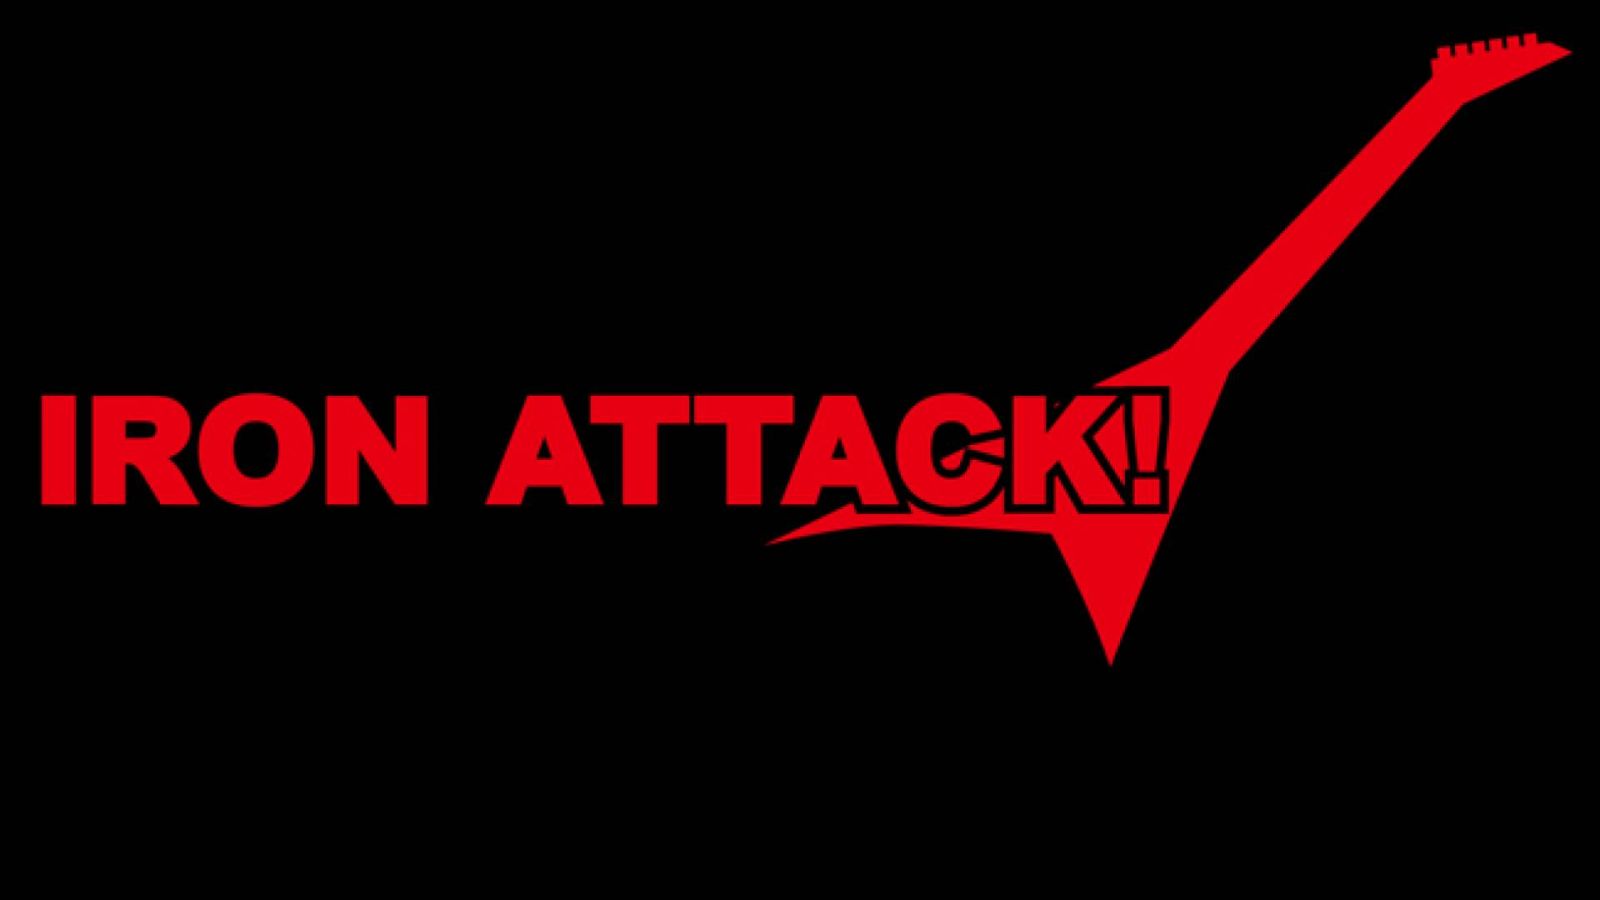 Novidades do IRON ATTACK! © 2015 IRON ATTACK! All rights reserved.